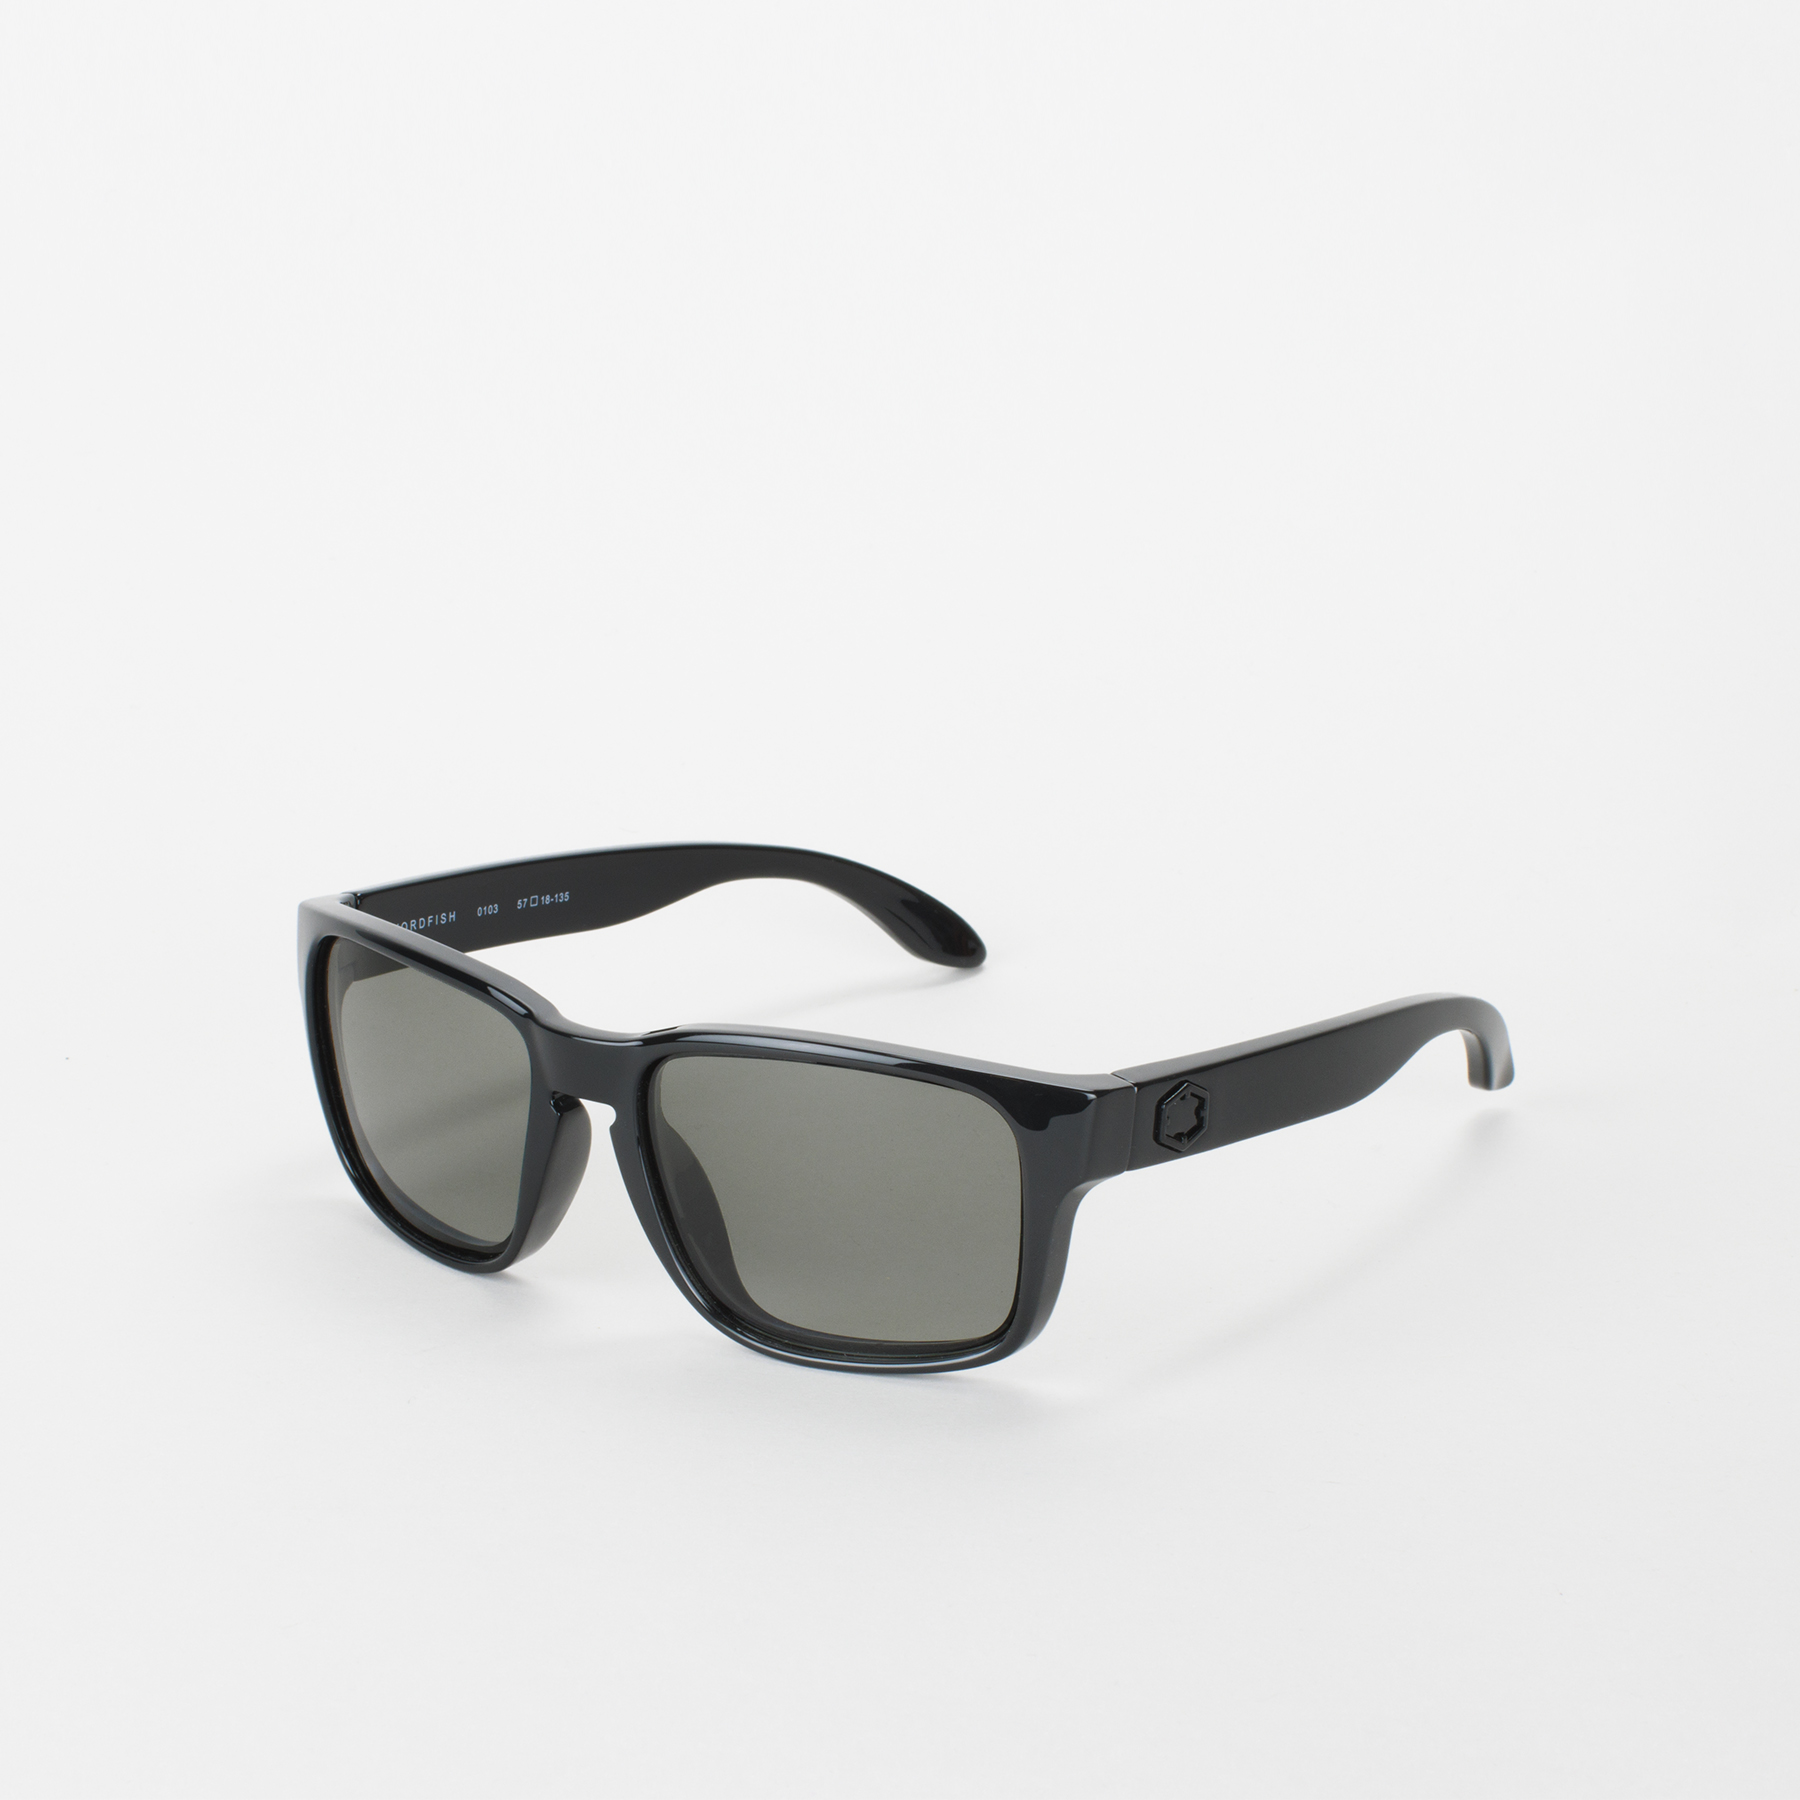 Swordfish black sunglasses with The One Nero lenses